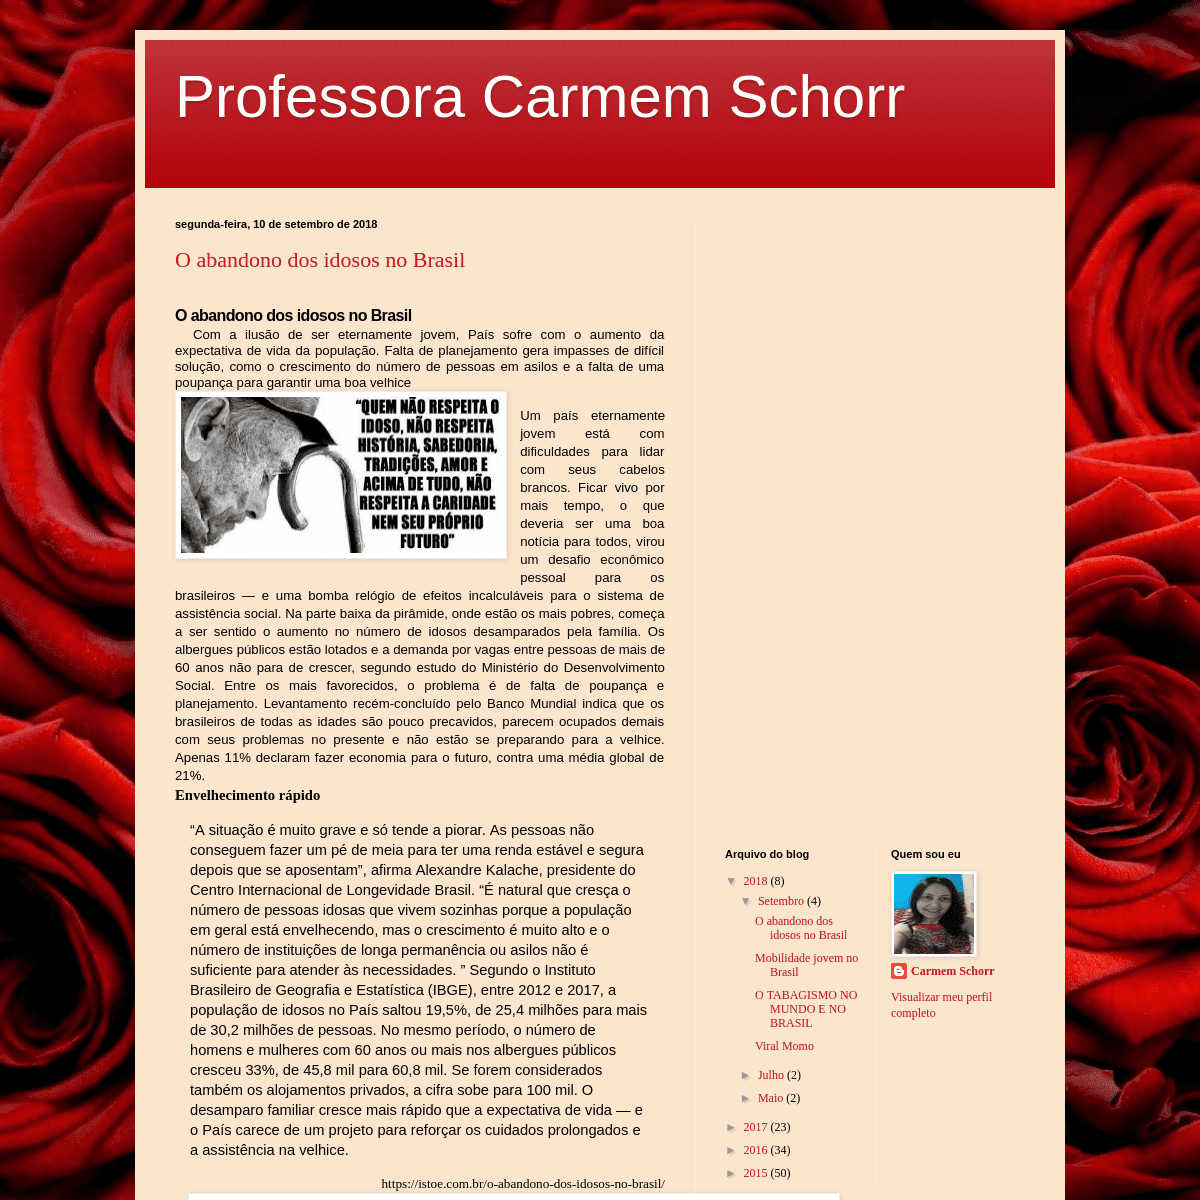 A complete backup of professoracarmemschorr.blogspot.com